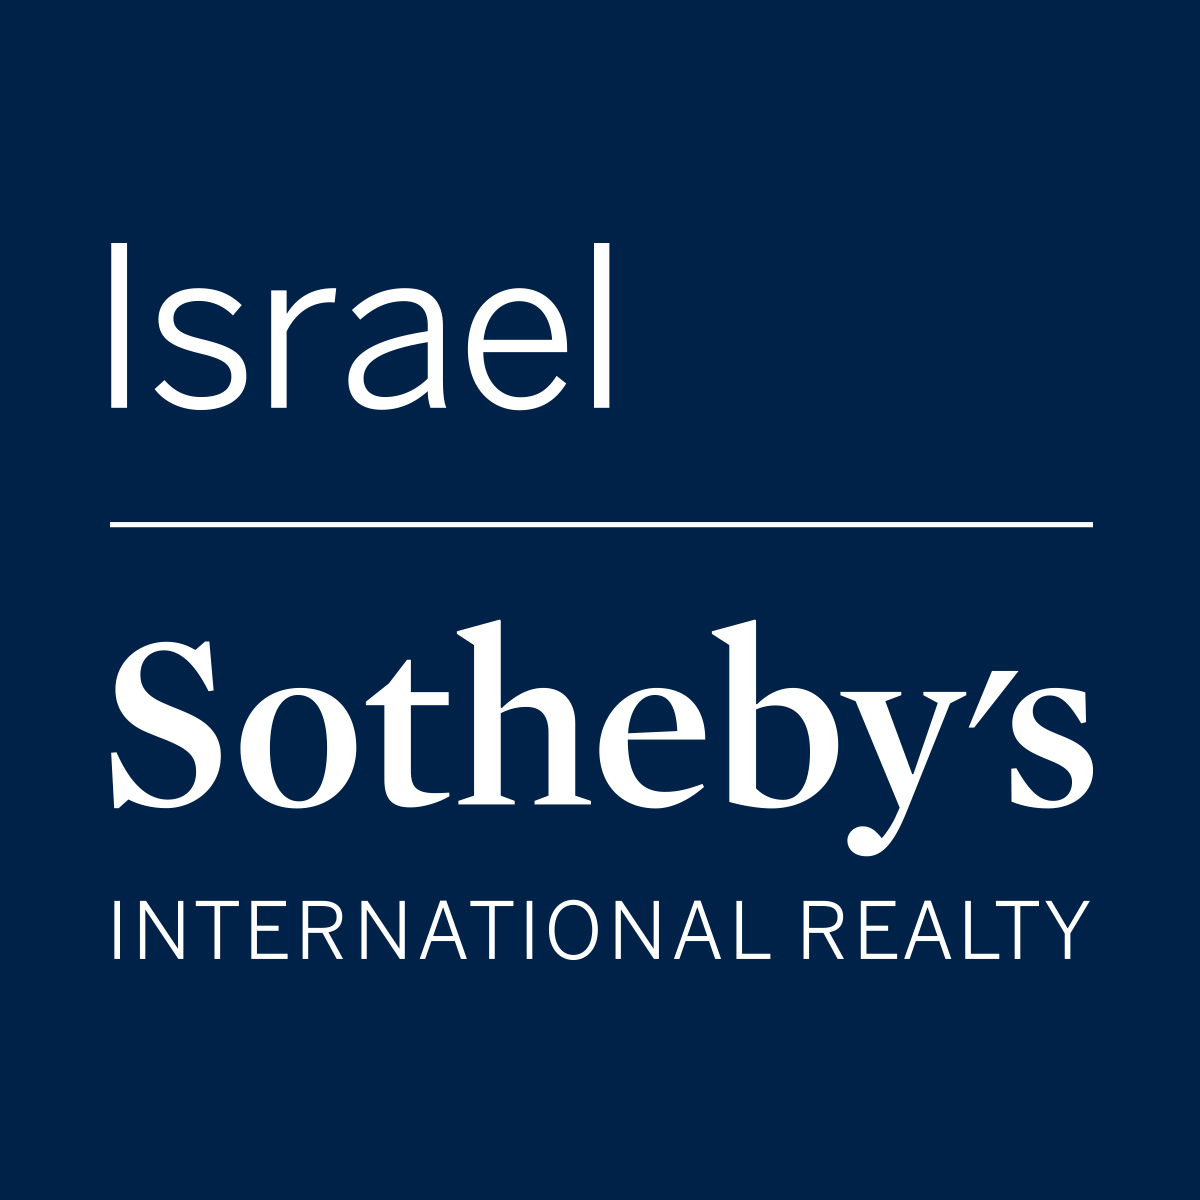 Israel Sotheby's International Realty